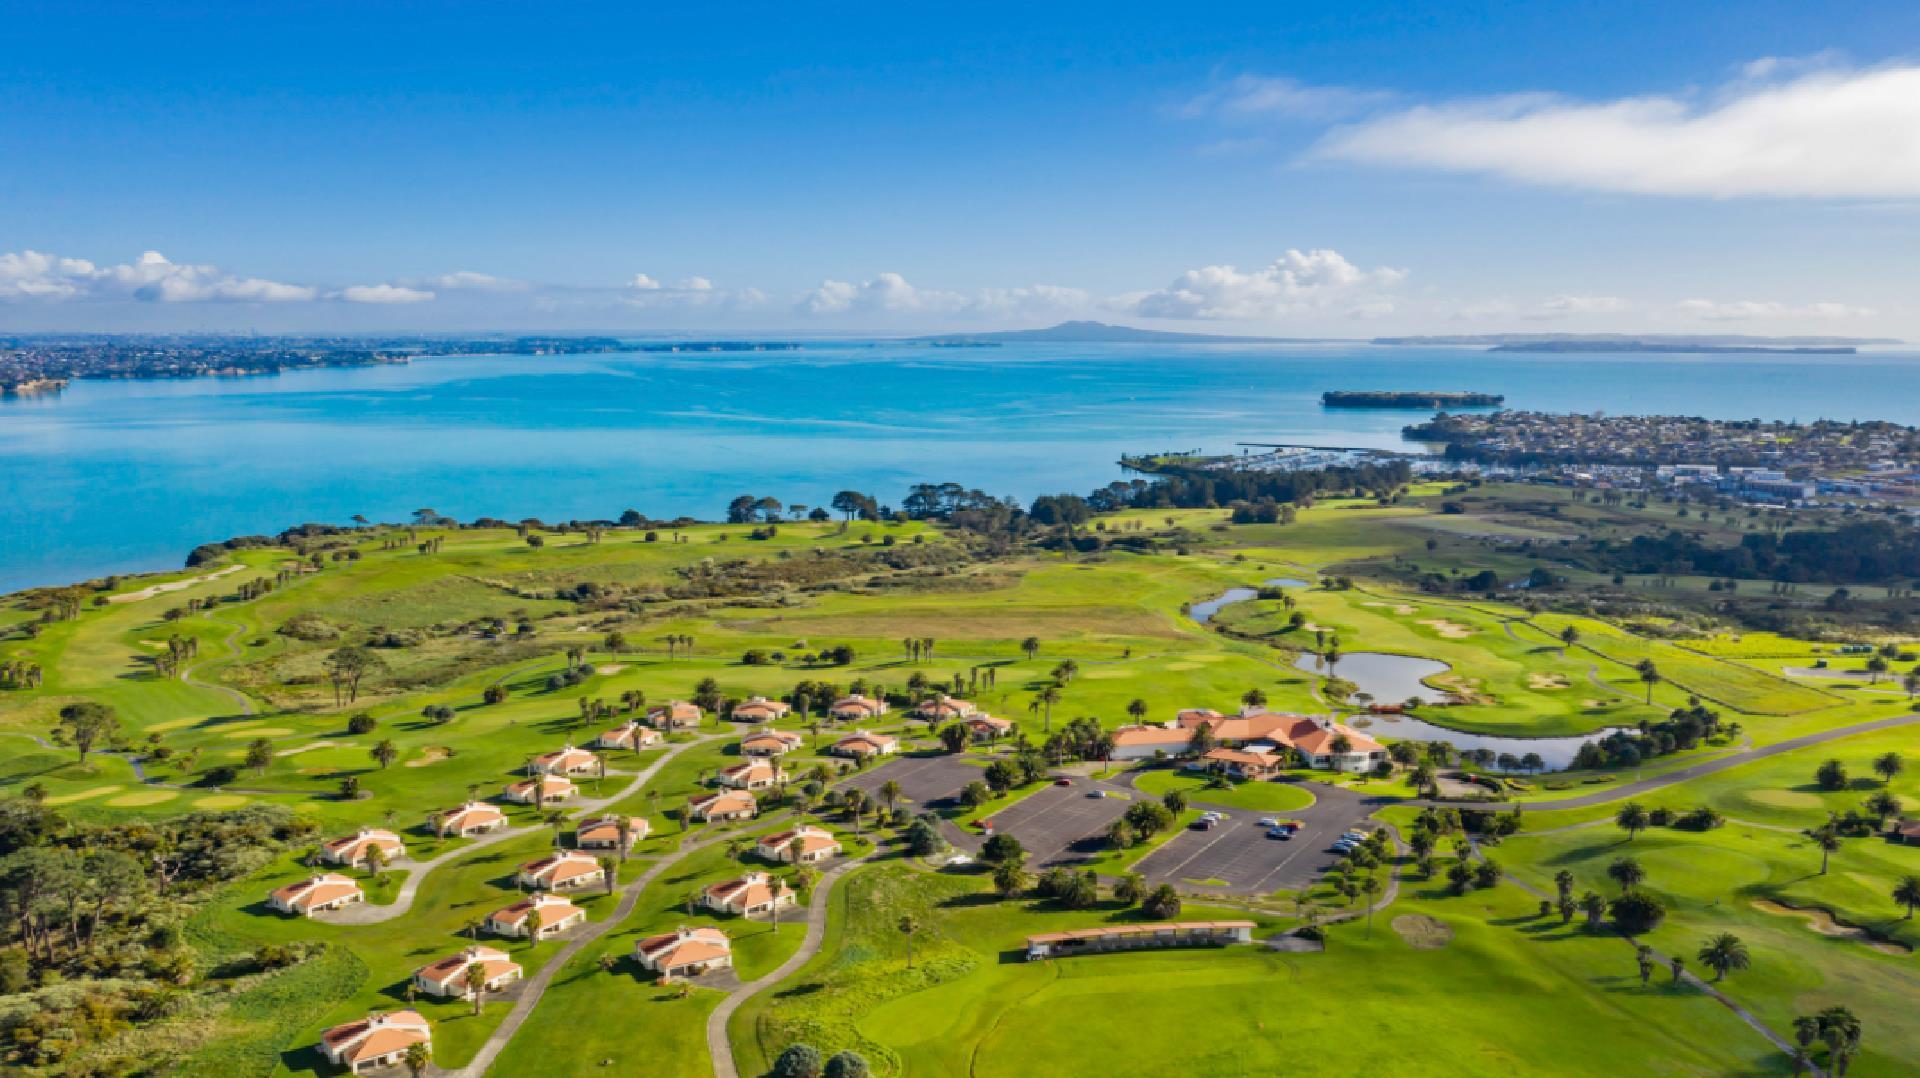 Rydges Formosa Golf Resort in Auckland, NZ